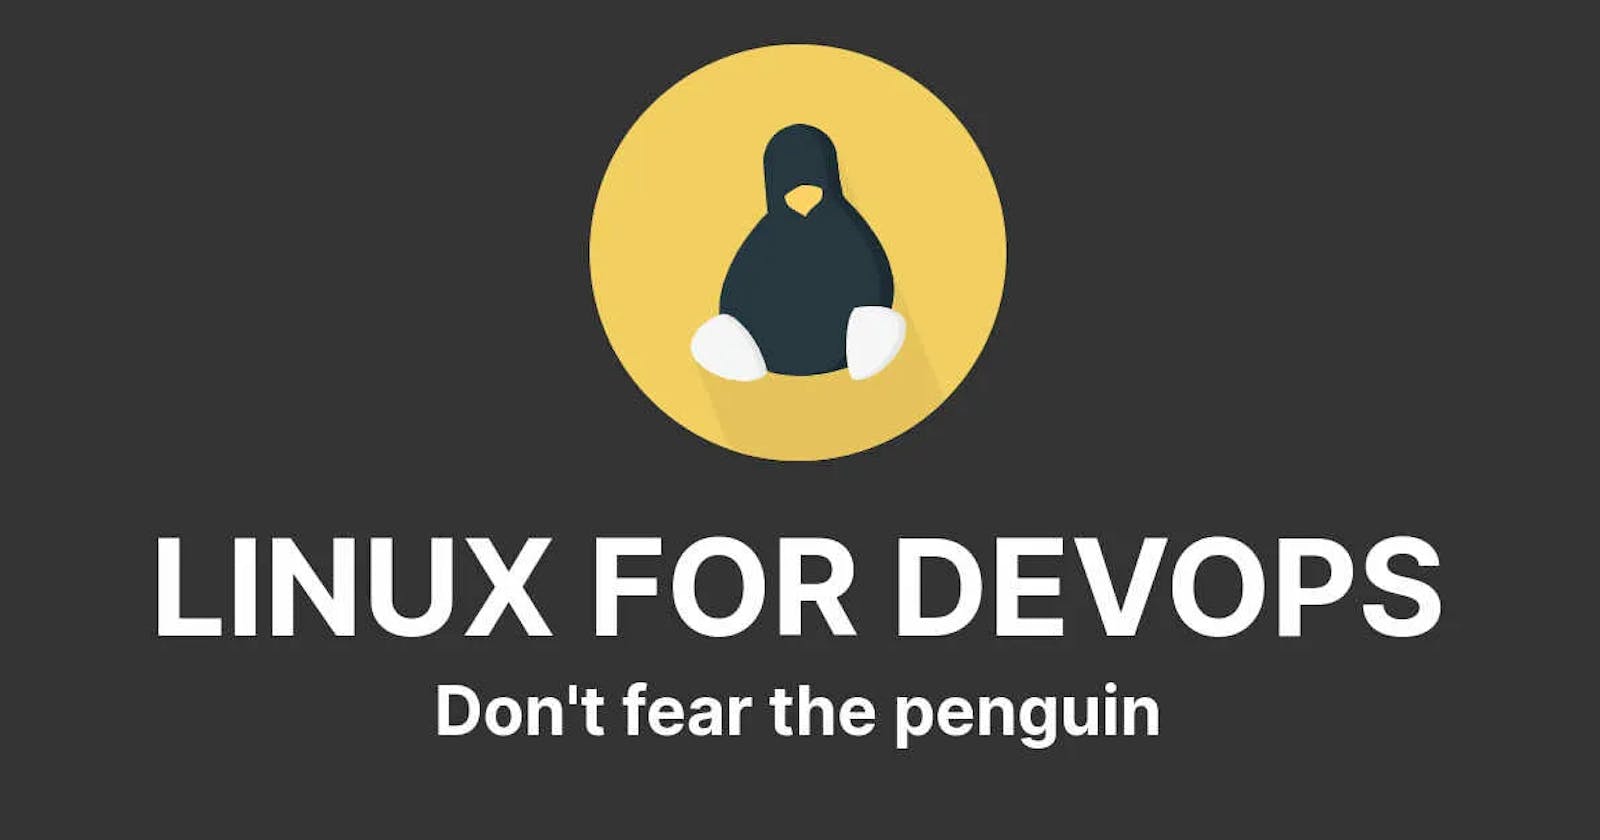 Linux for DevOps and Developers